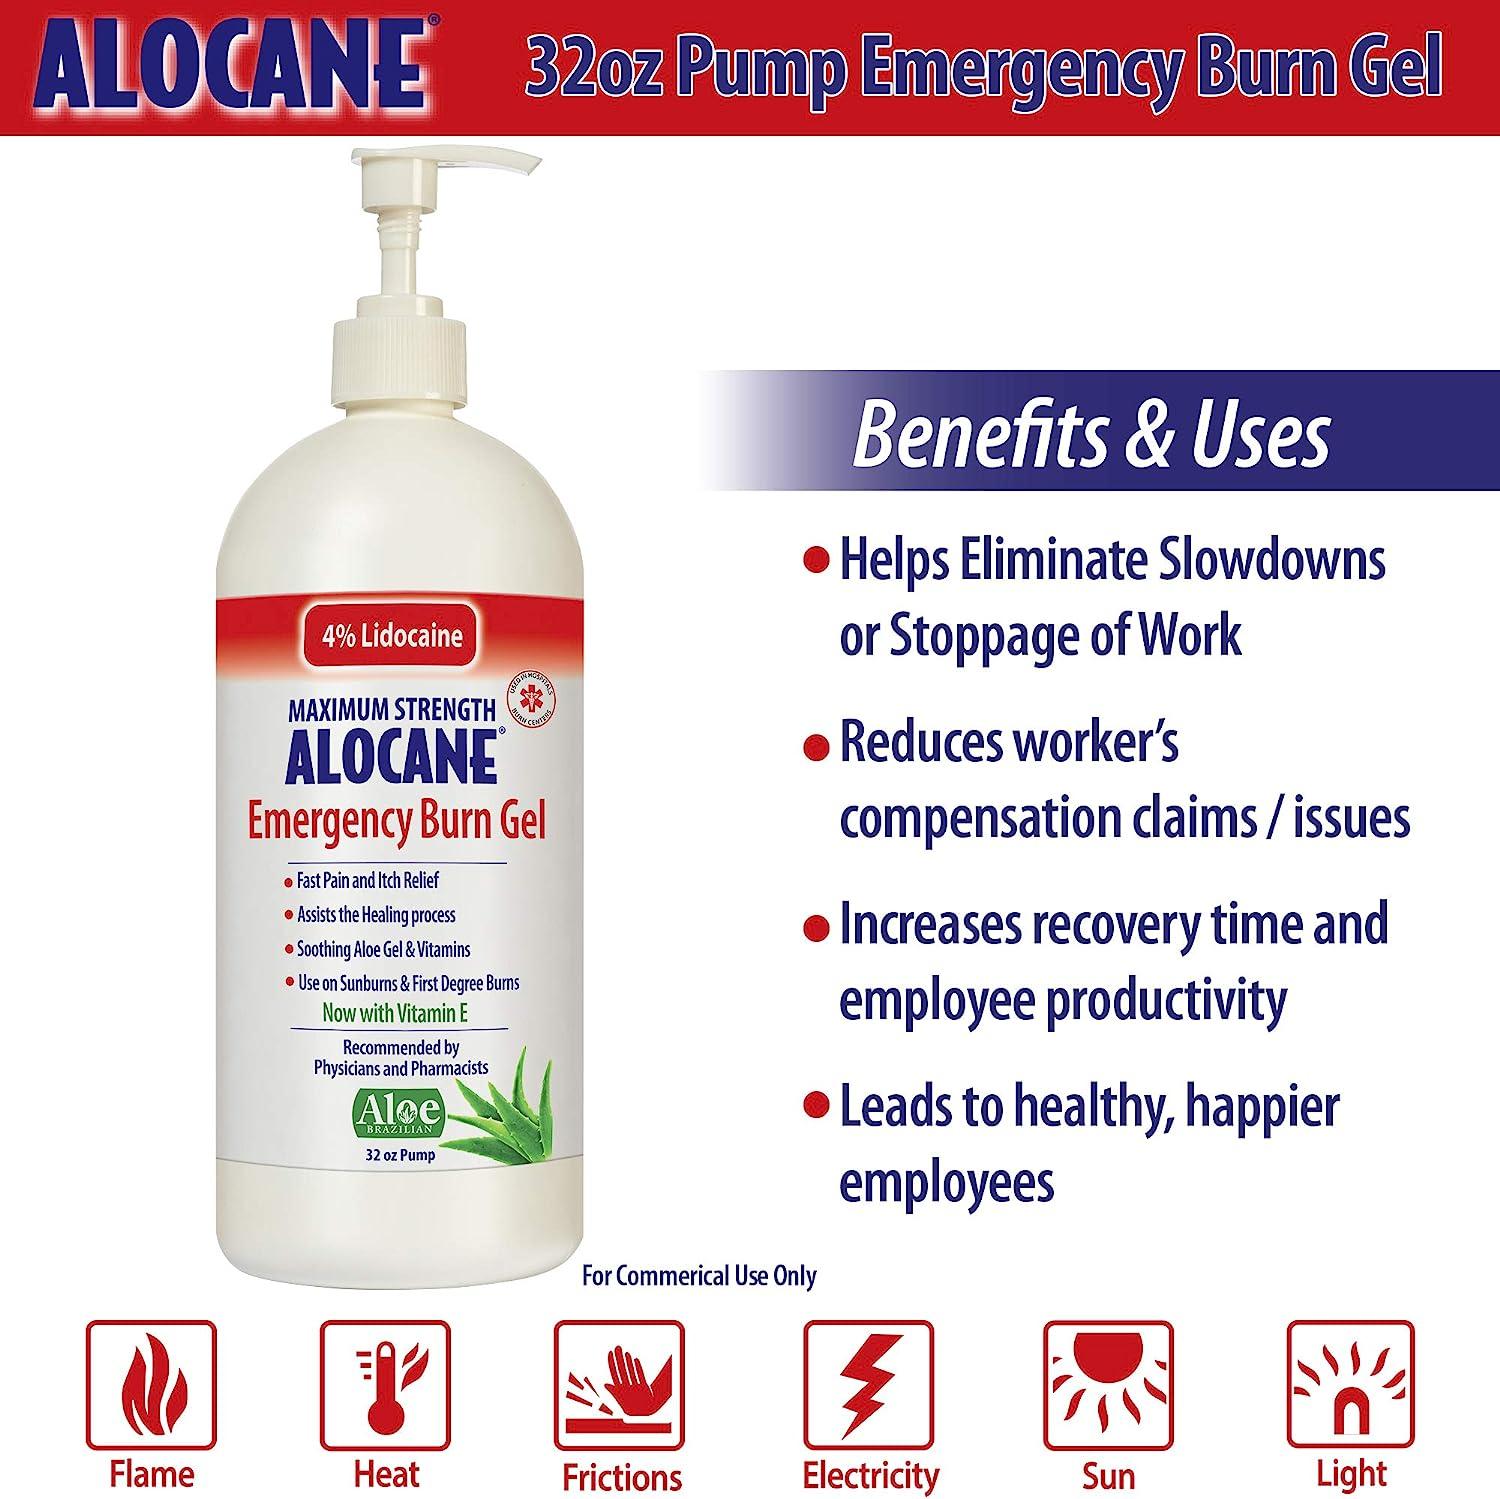 ALOCANE Emergency Burn Gel, 4% Lidocaine Max Strength Fast Pain Itch Relief  for Minor Burns, Sunburn, Kitchen, Radiation, Chemical, First Degree Burn